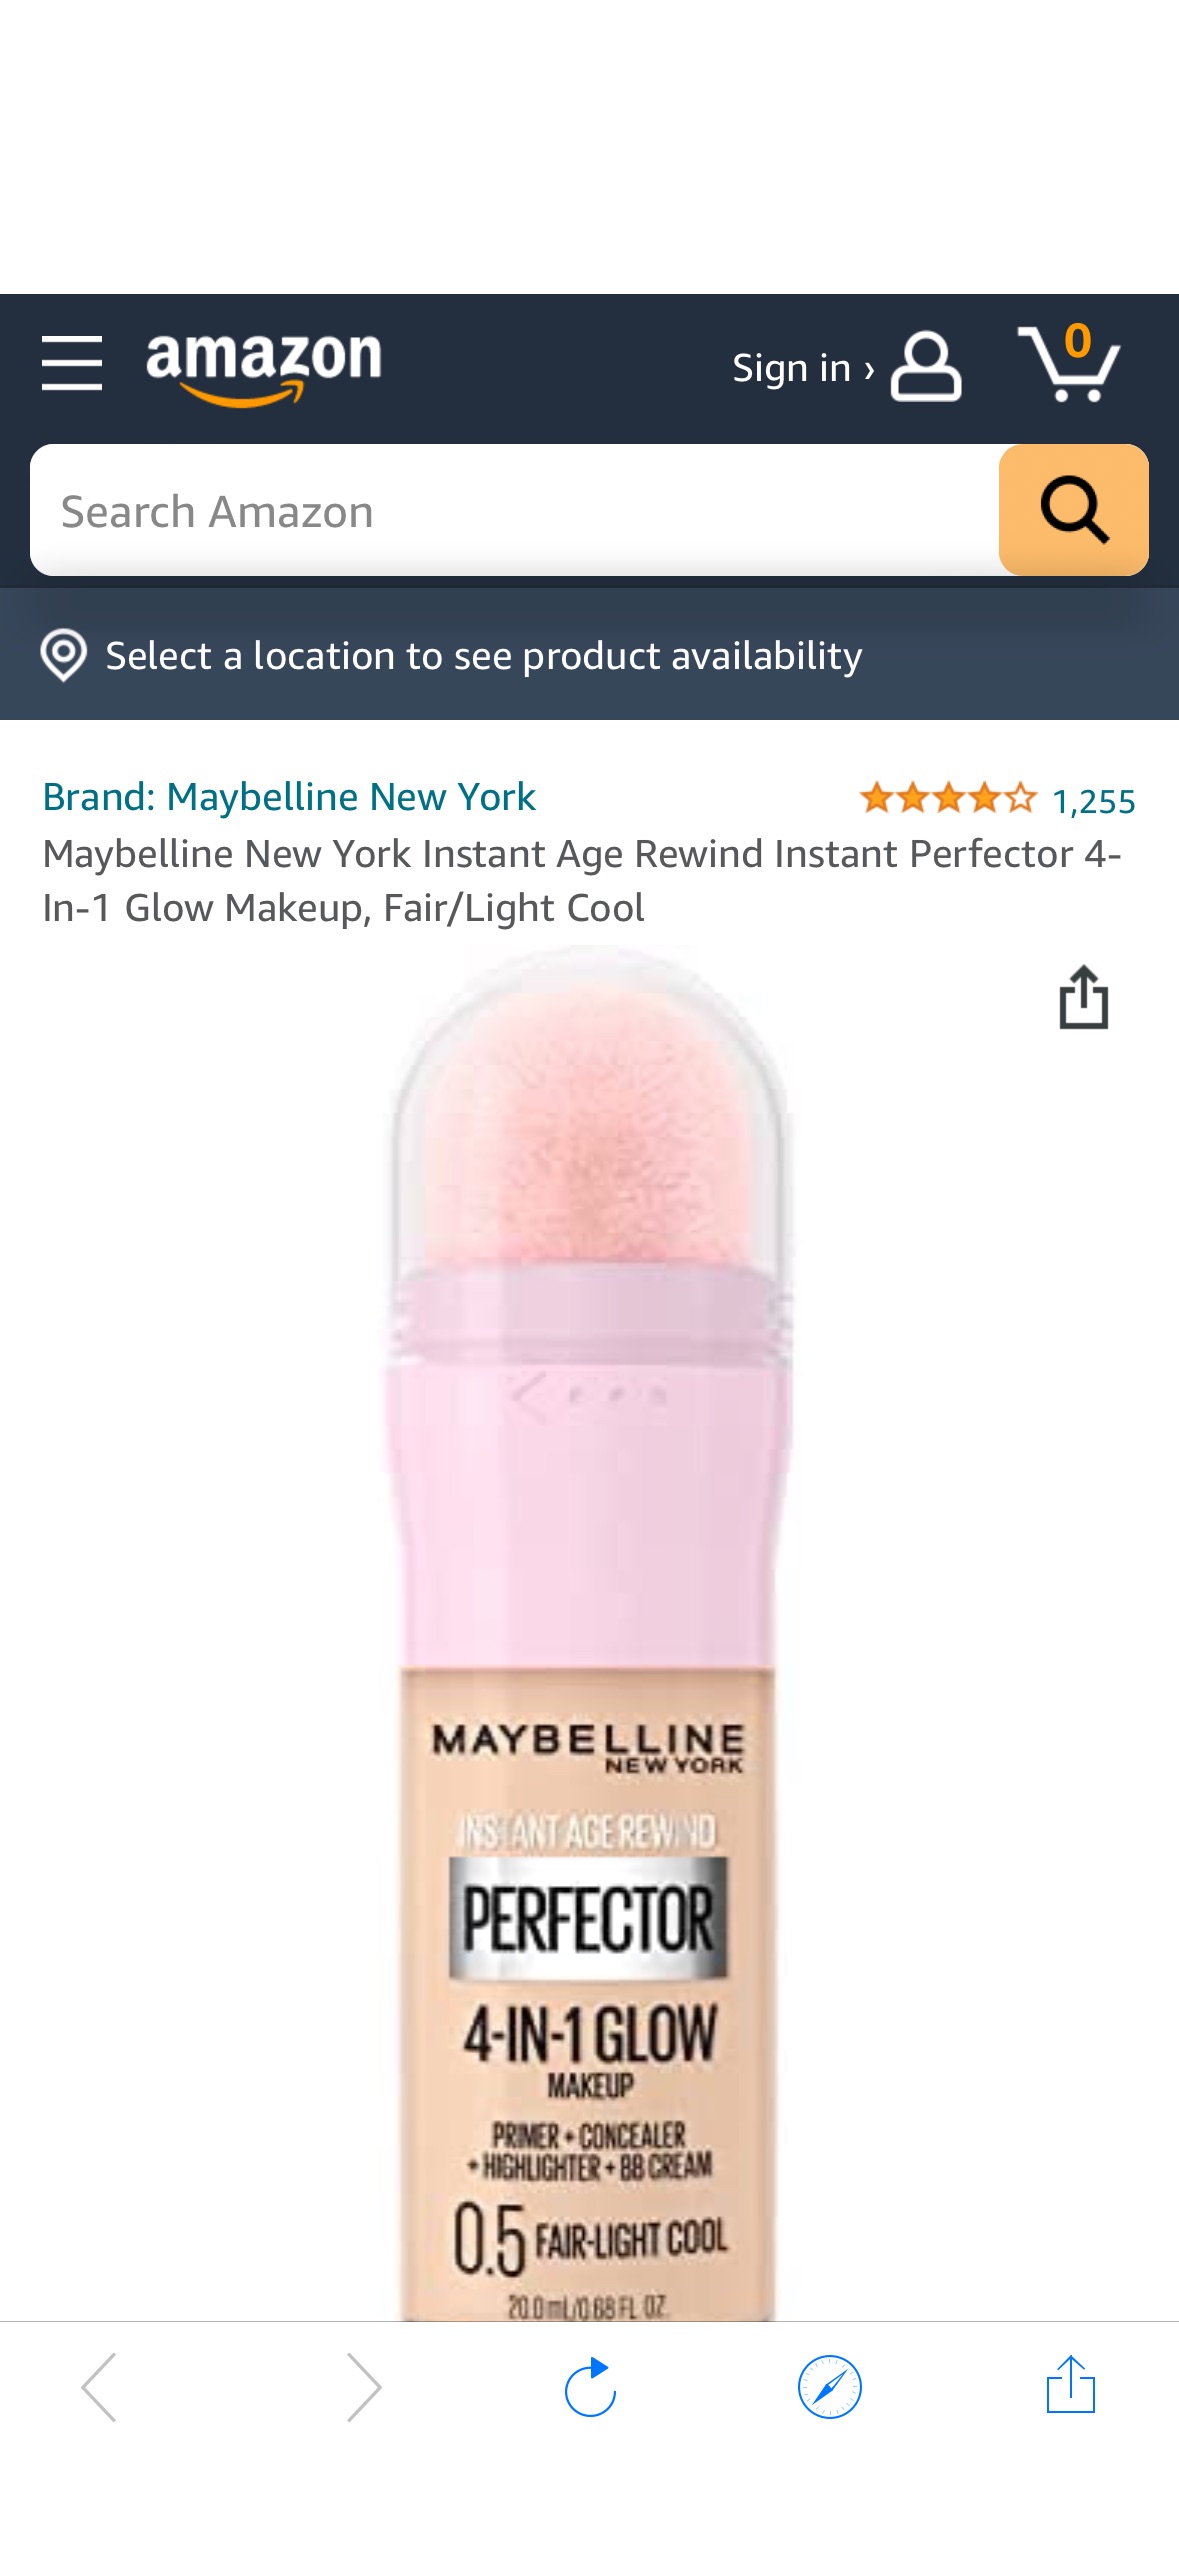 Amazon.com : Maybelline New York Instant Age Rewind Instant Perfector 4-In-1 Glow Makeup粉底液